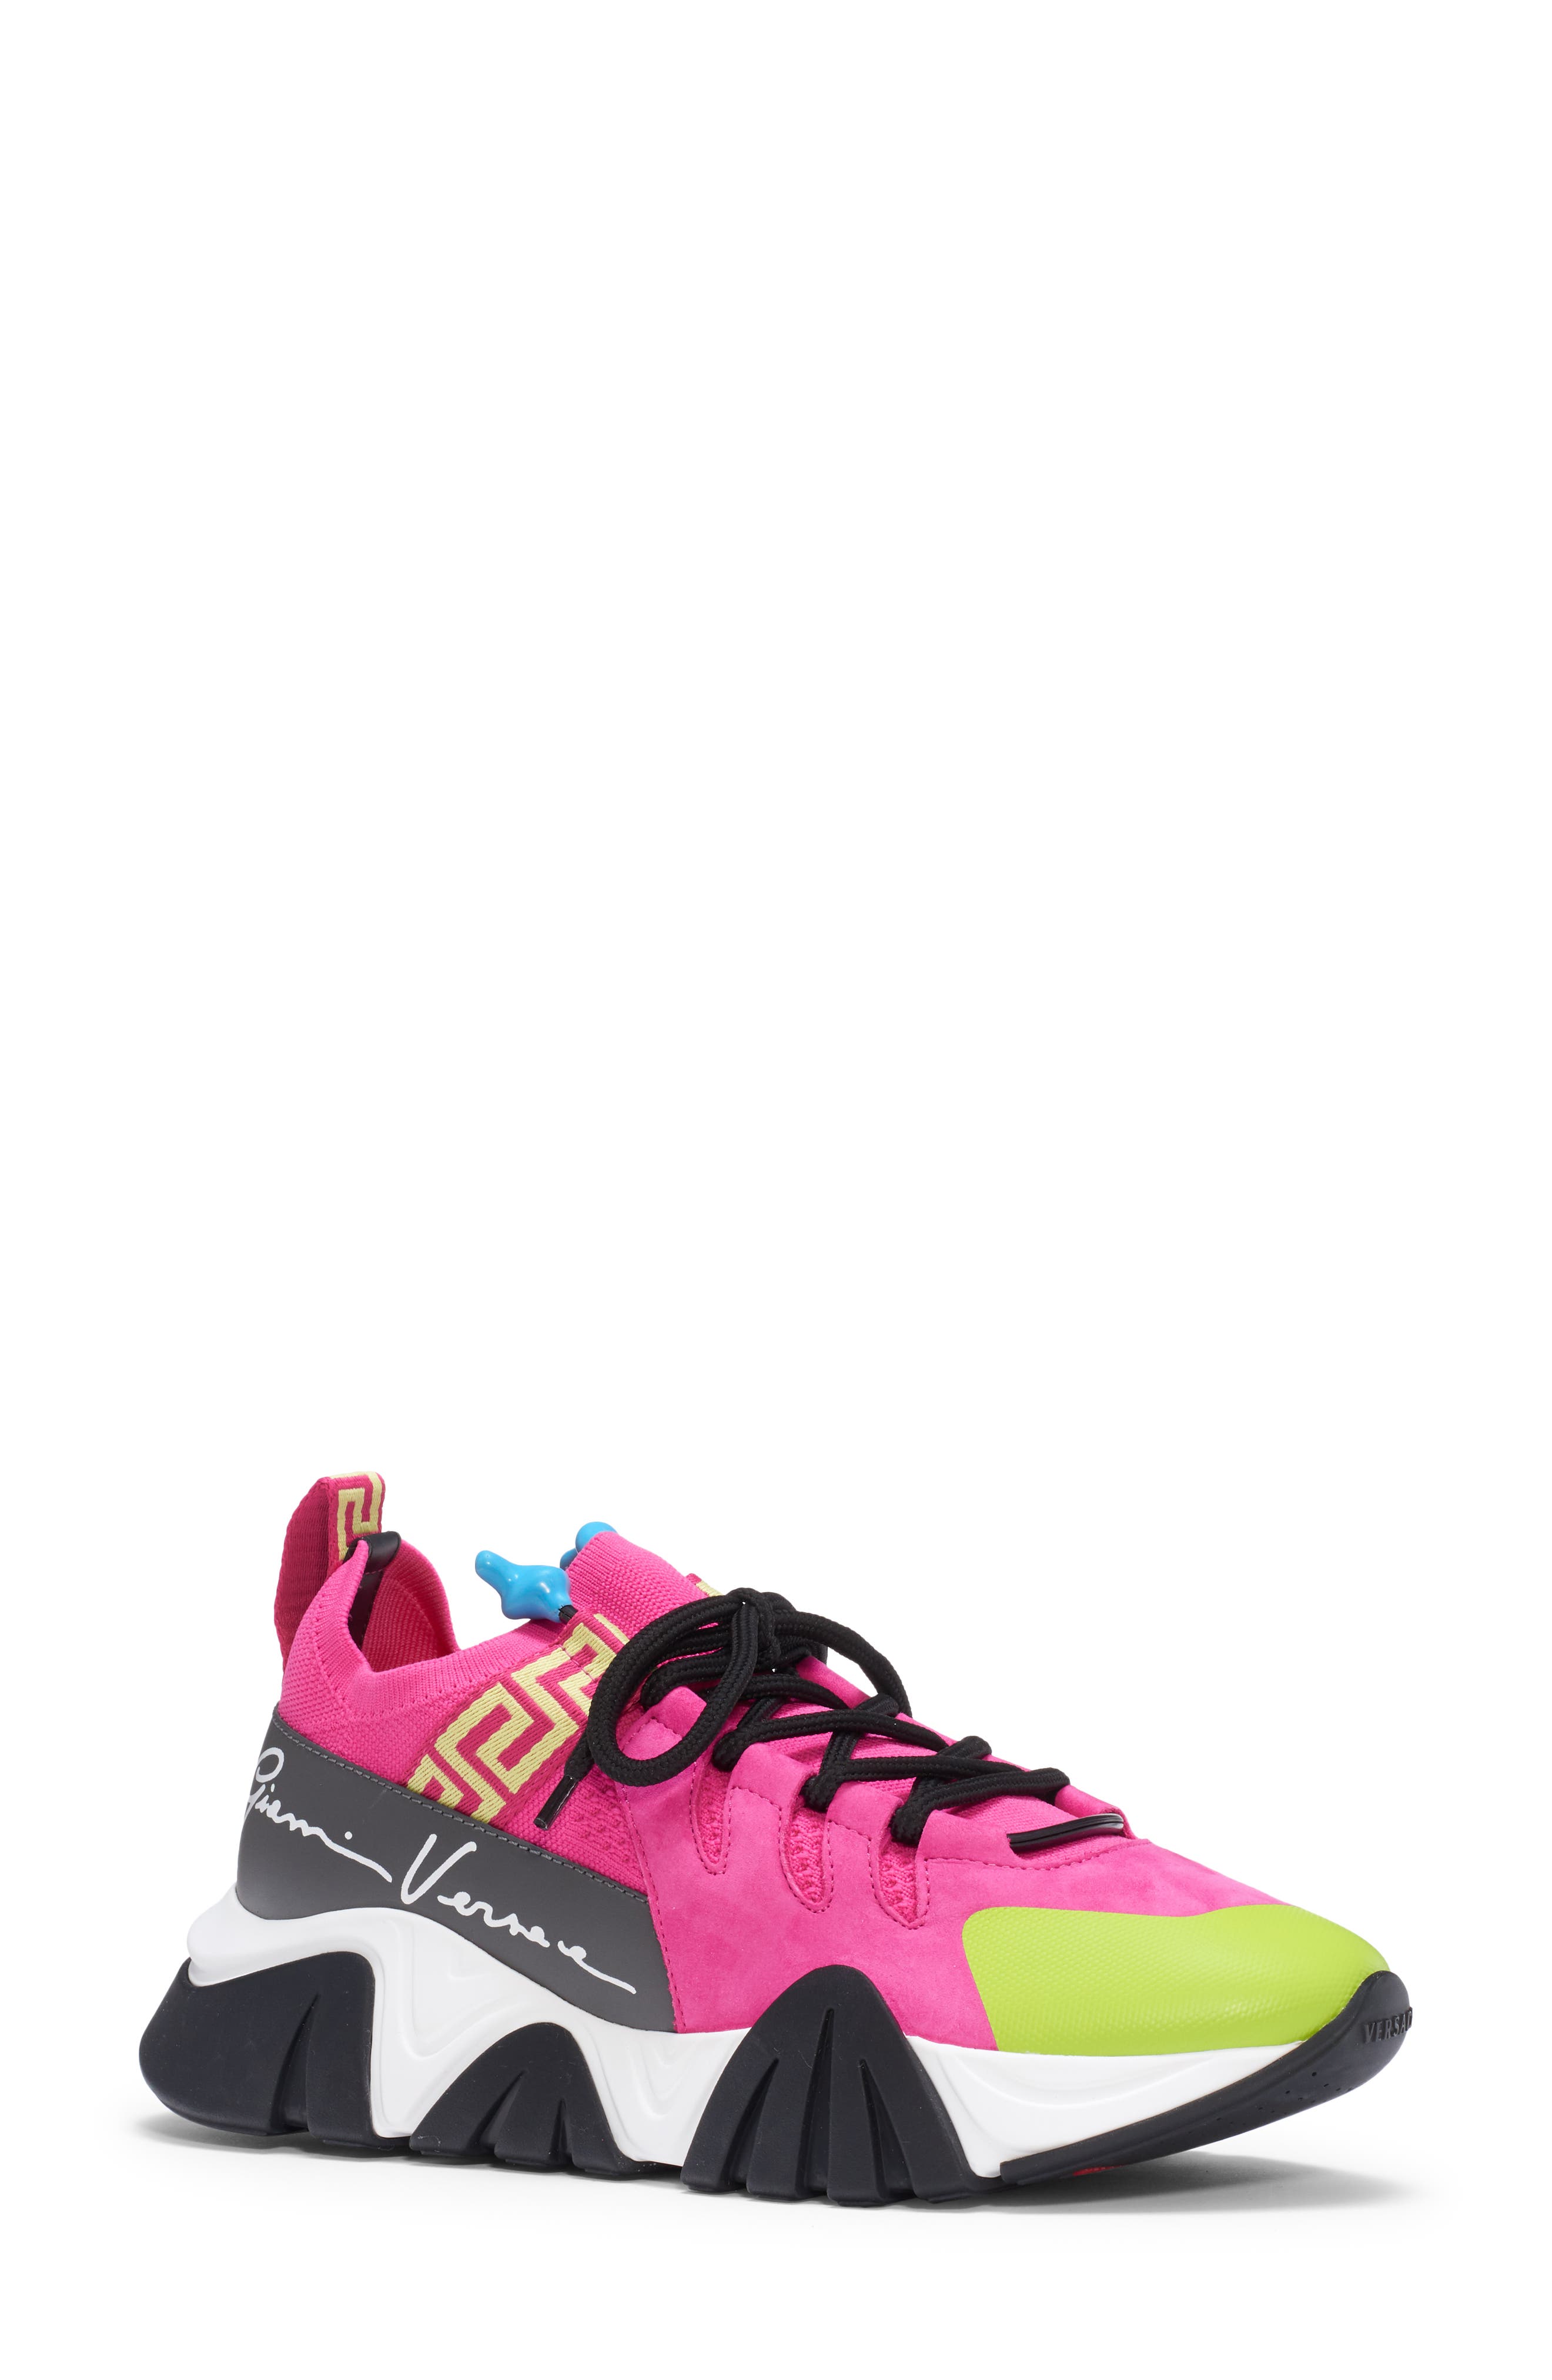 versace sneakers pink